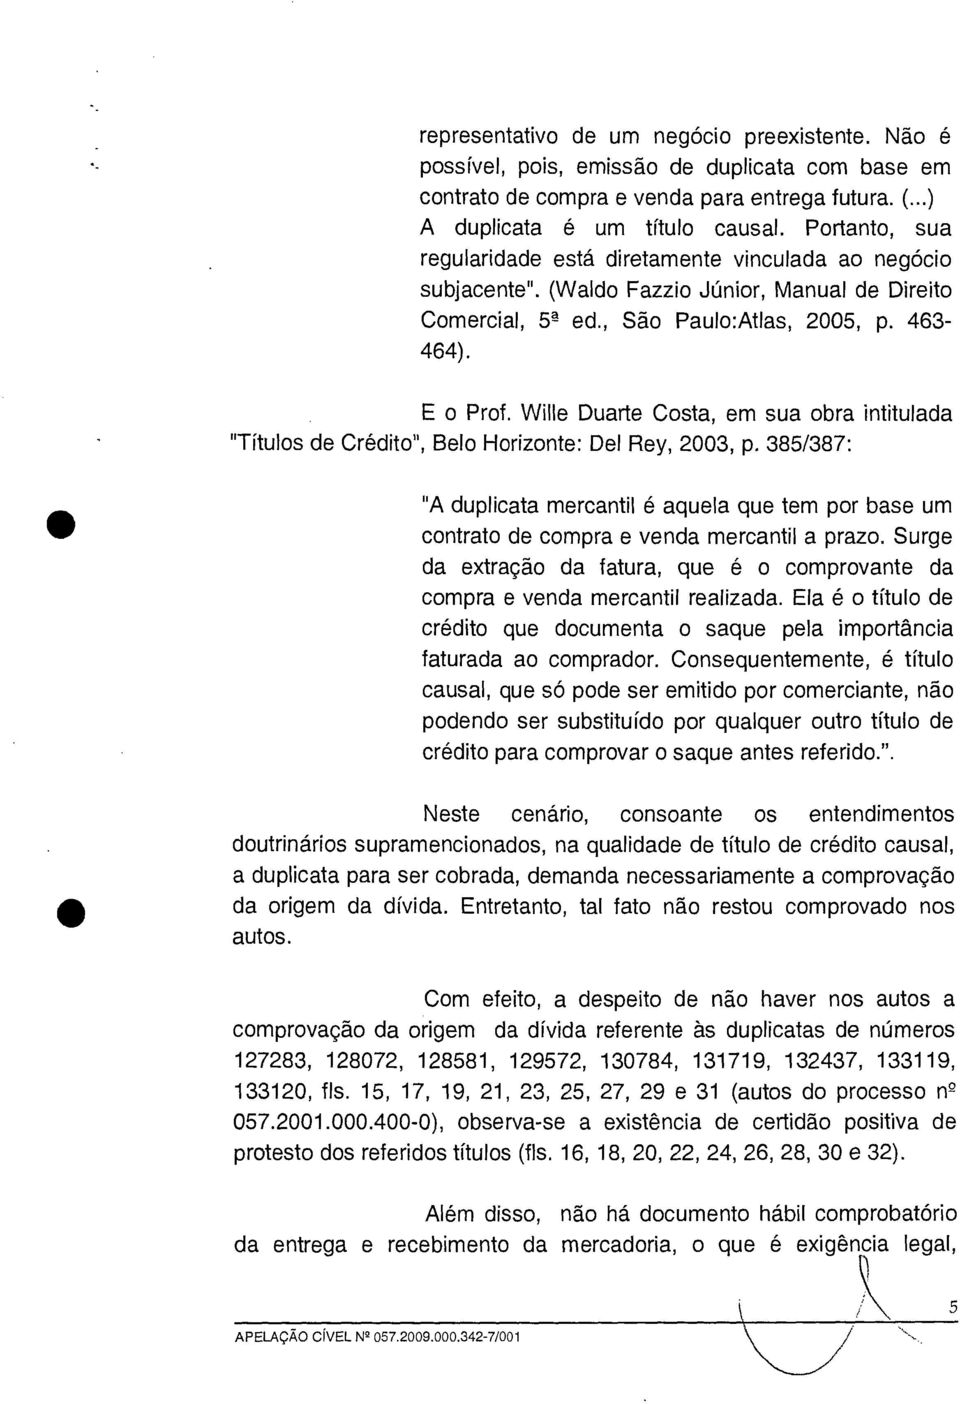 Wille Duarte Costa, em sua obra intitulada "Títulos de Crédito", Belo Horizonte: Del Rey, 2003, p.